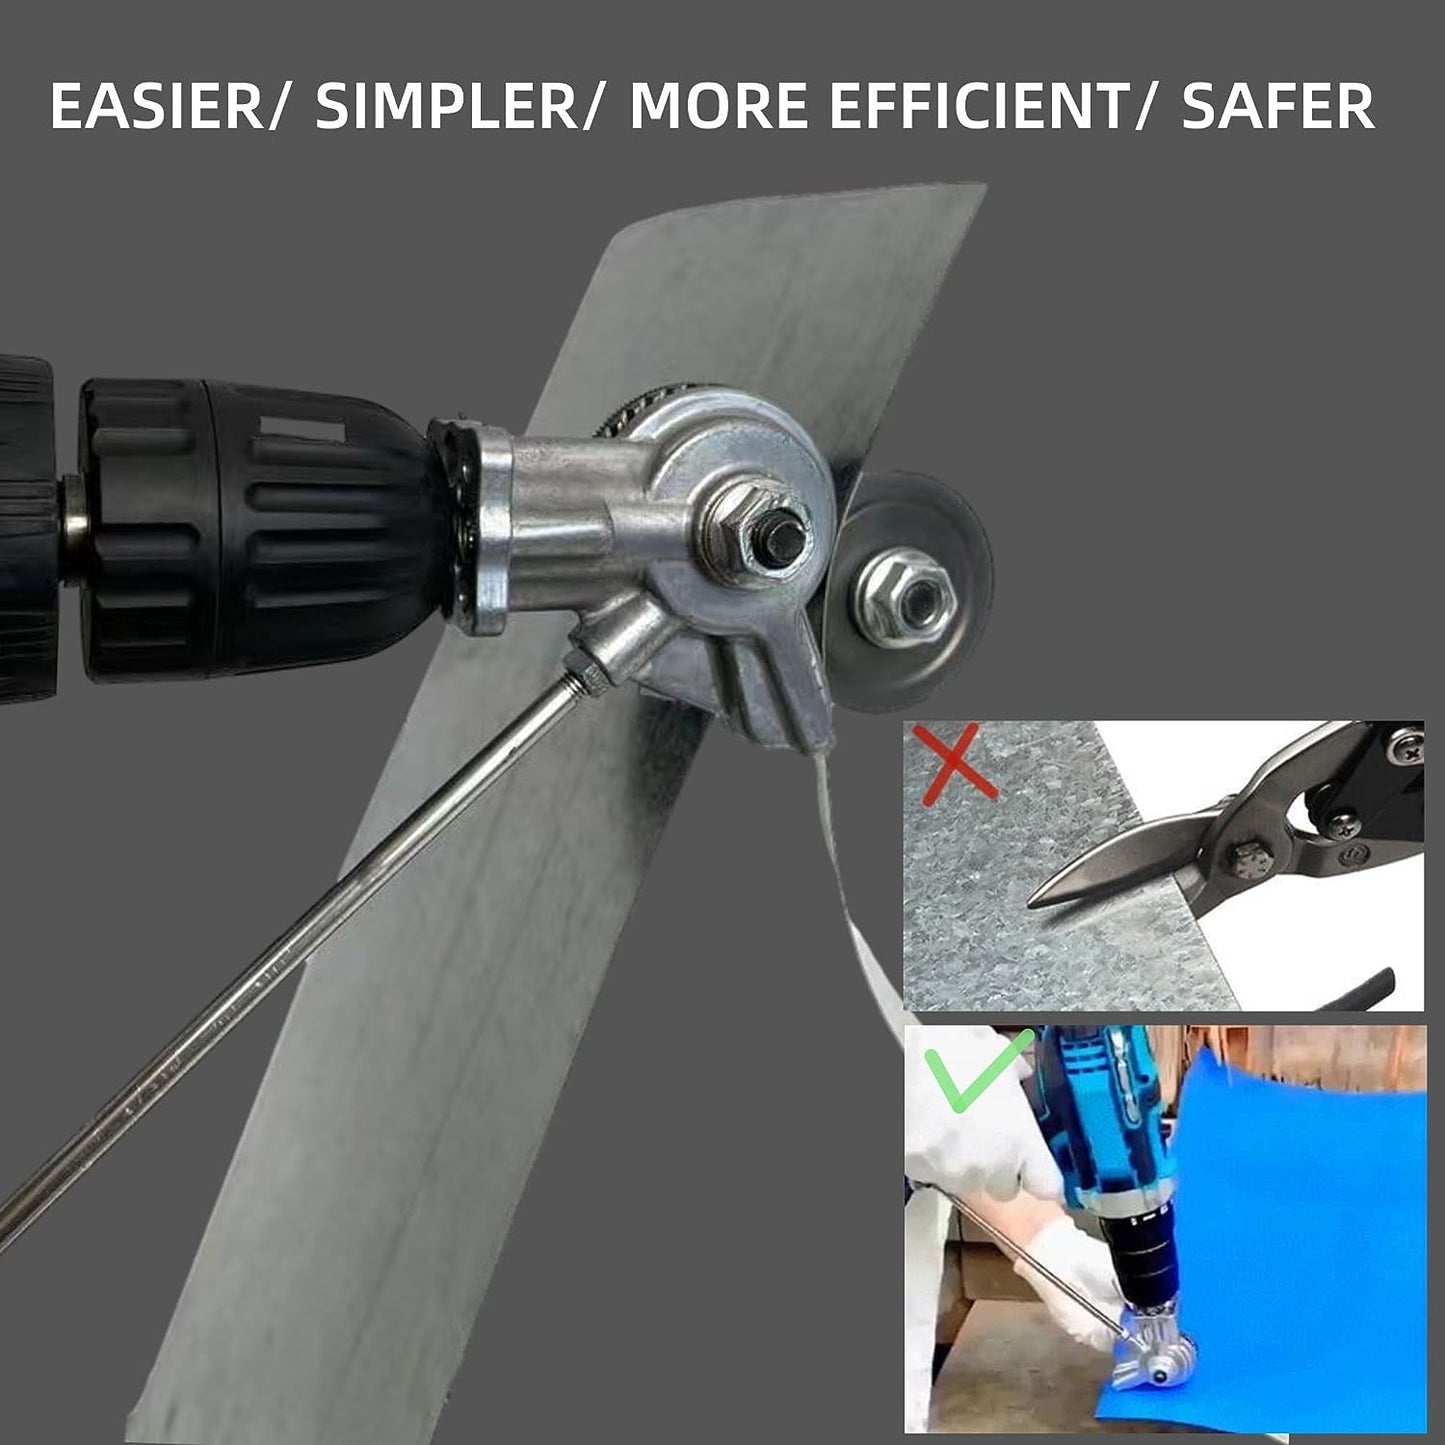 New Sheet Metal Cutter Drill Attachment,Electric Drill